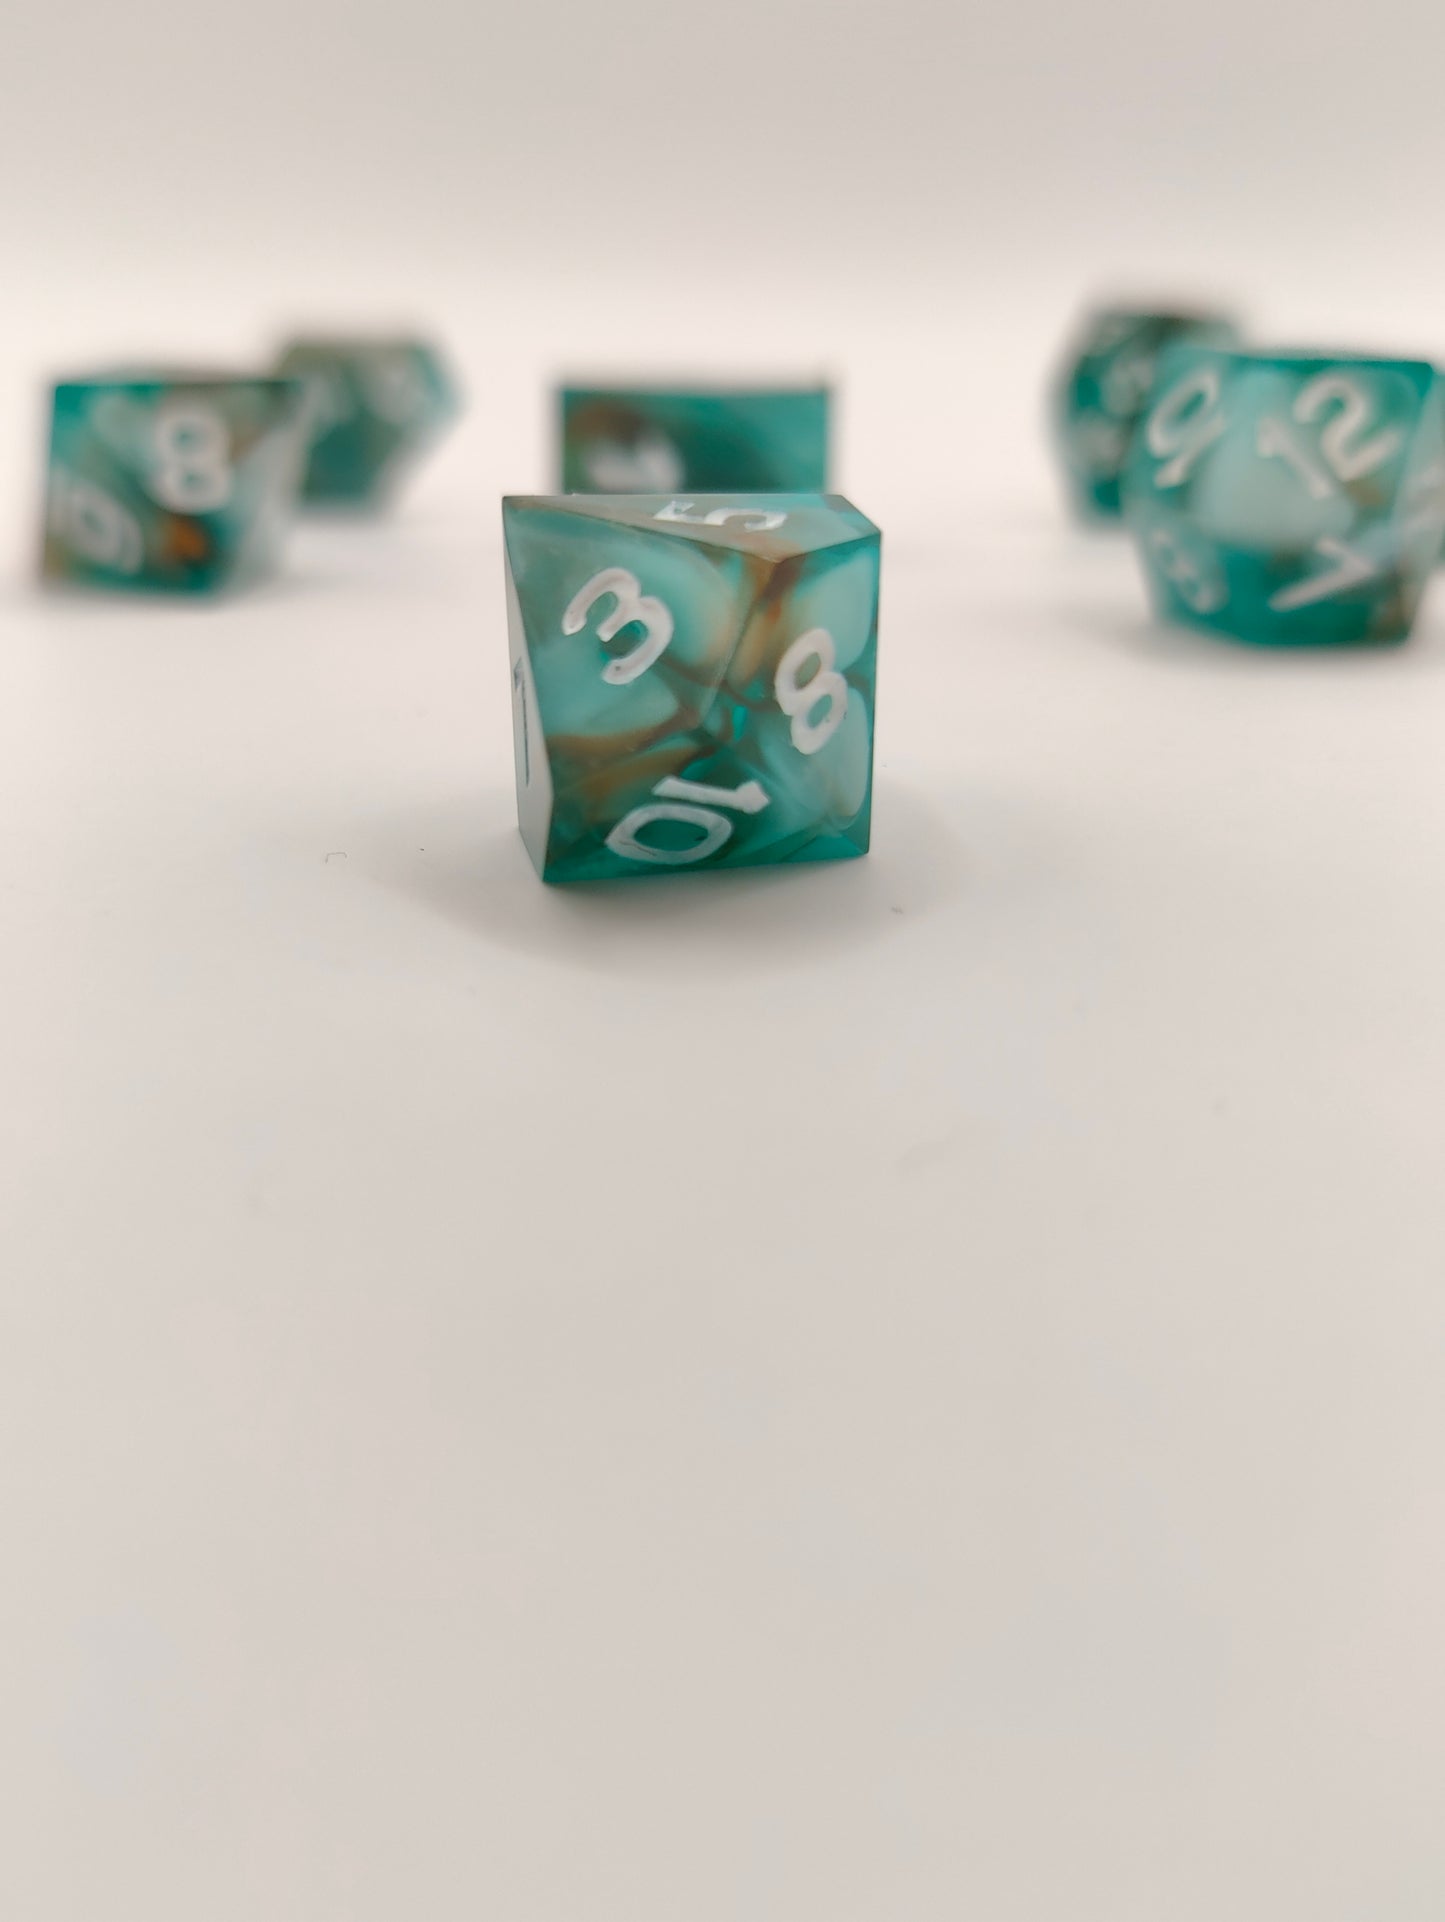 Mini dice set: Daycourt